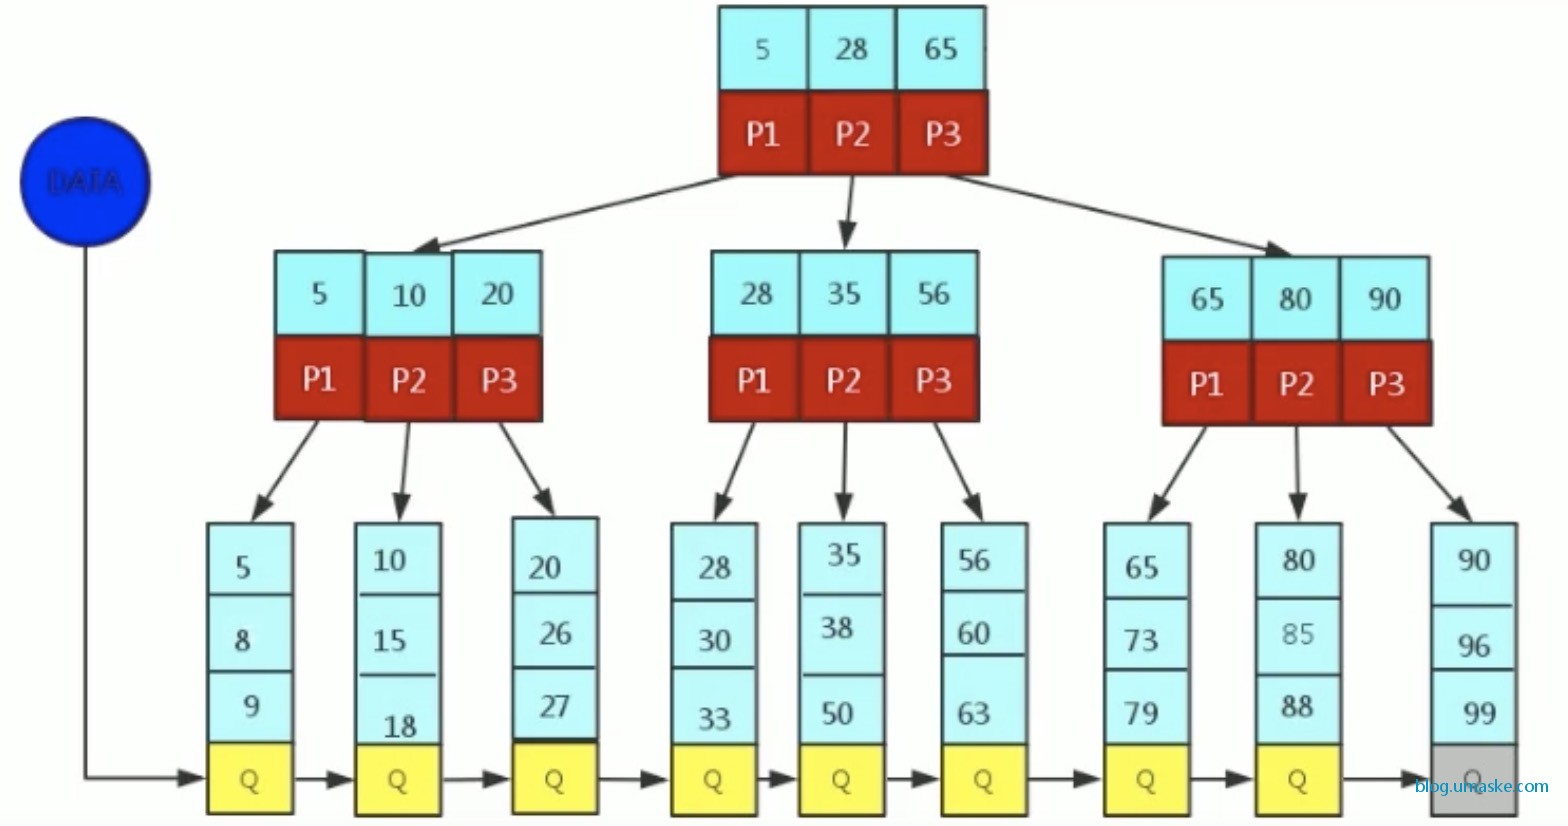 b+树结构图示例